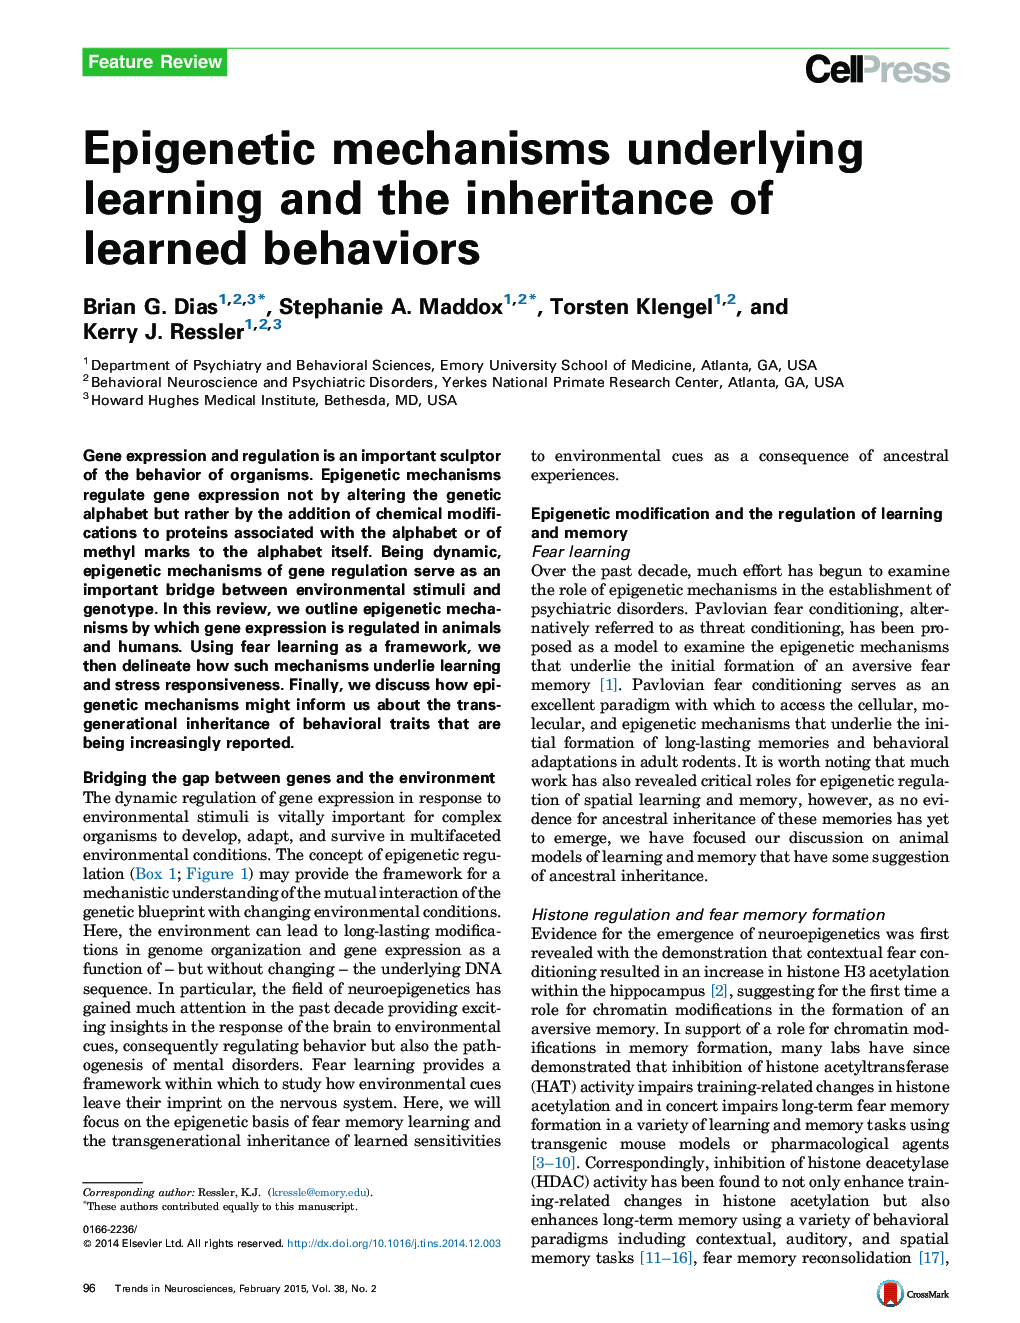 Epigenetic mechanisms underlying learning and the inheritance of learned behaviors